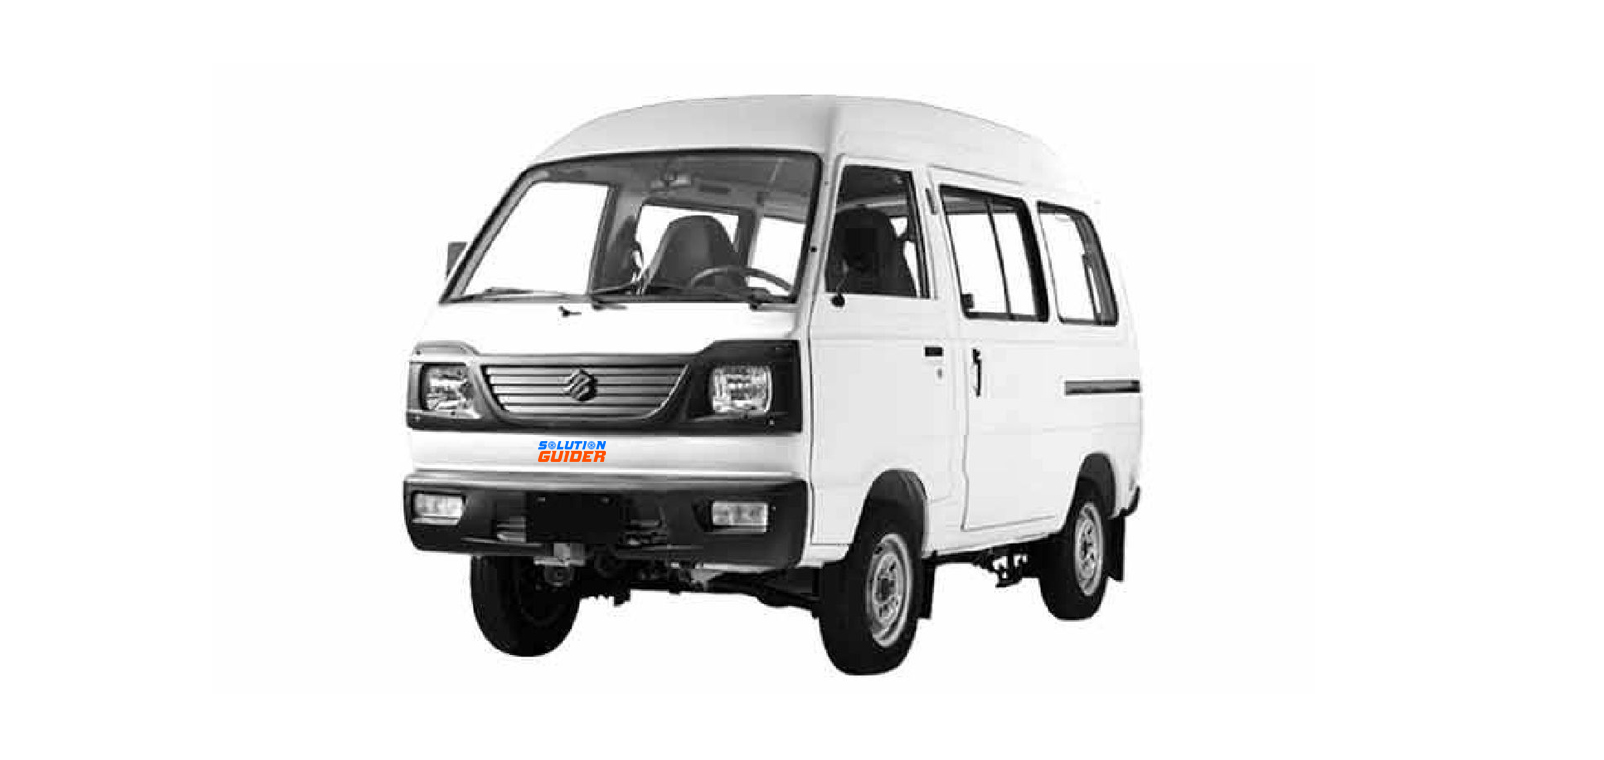 Suzuki Bolan Carry Daba 2023 Price in Pakistan